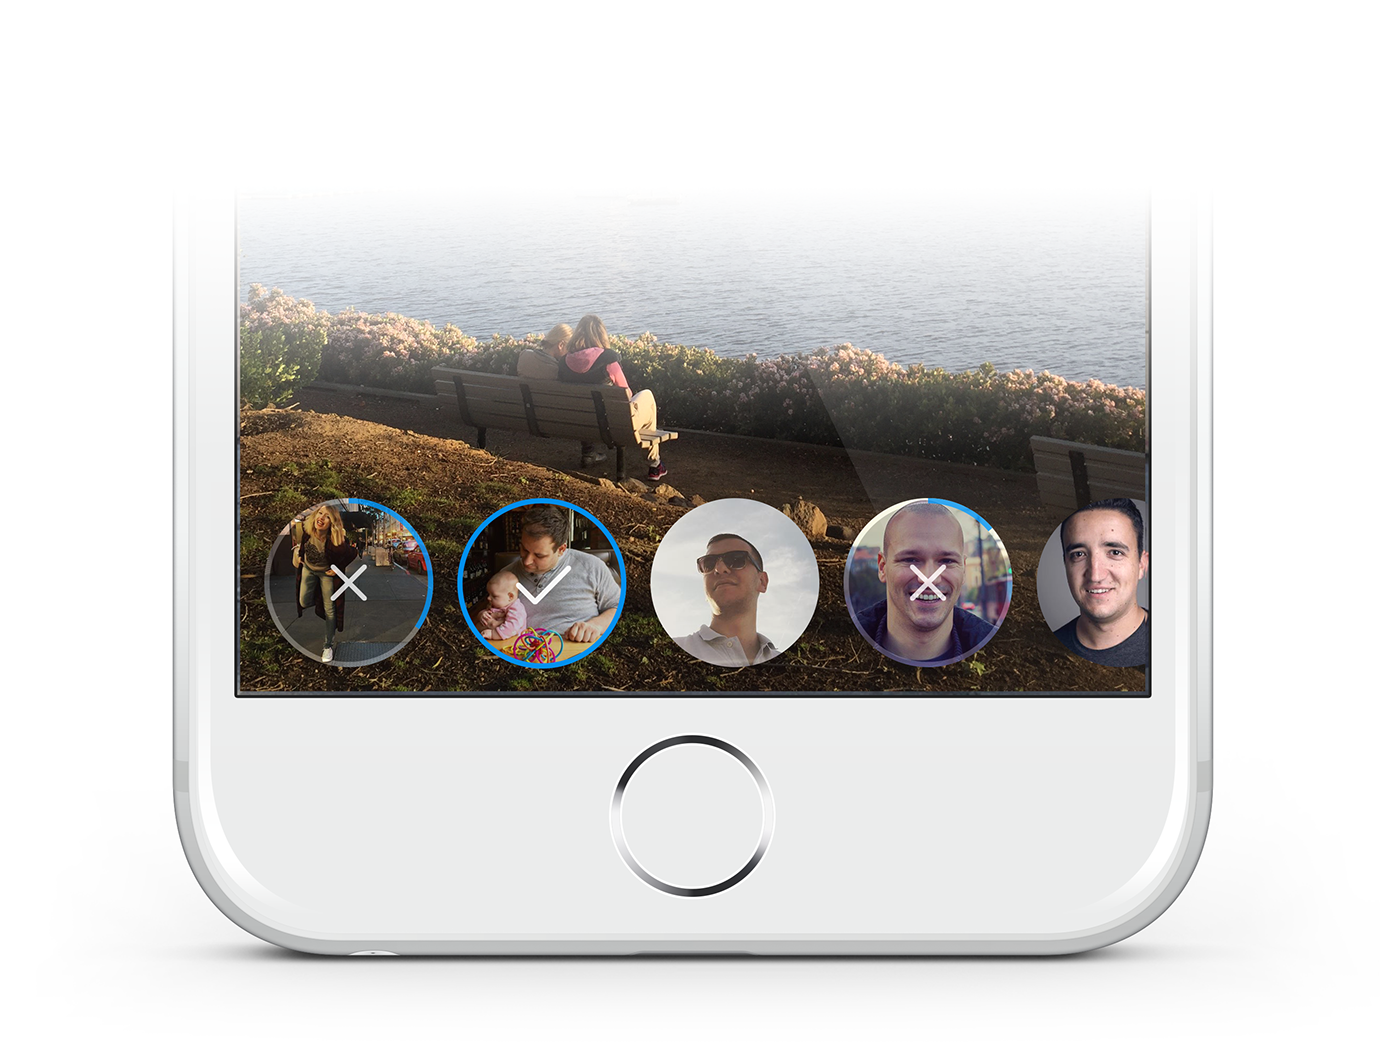 facebook messenger camera app ios send concept prototype